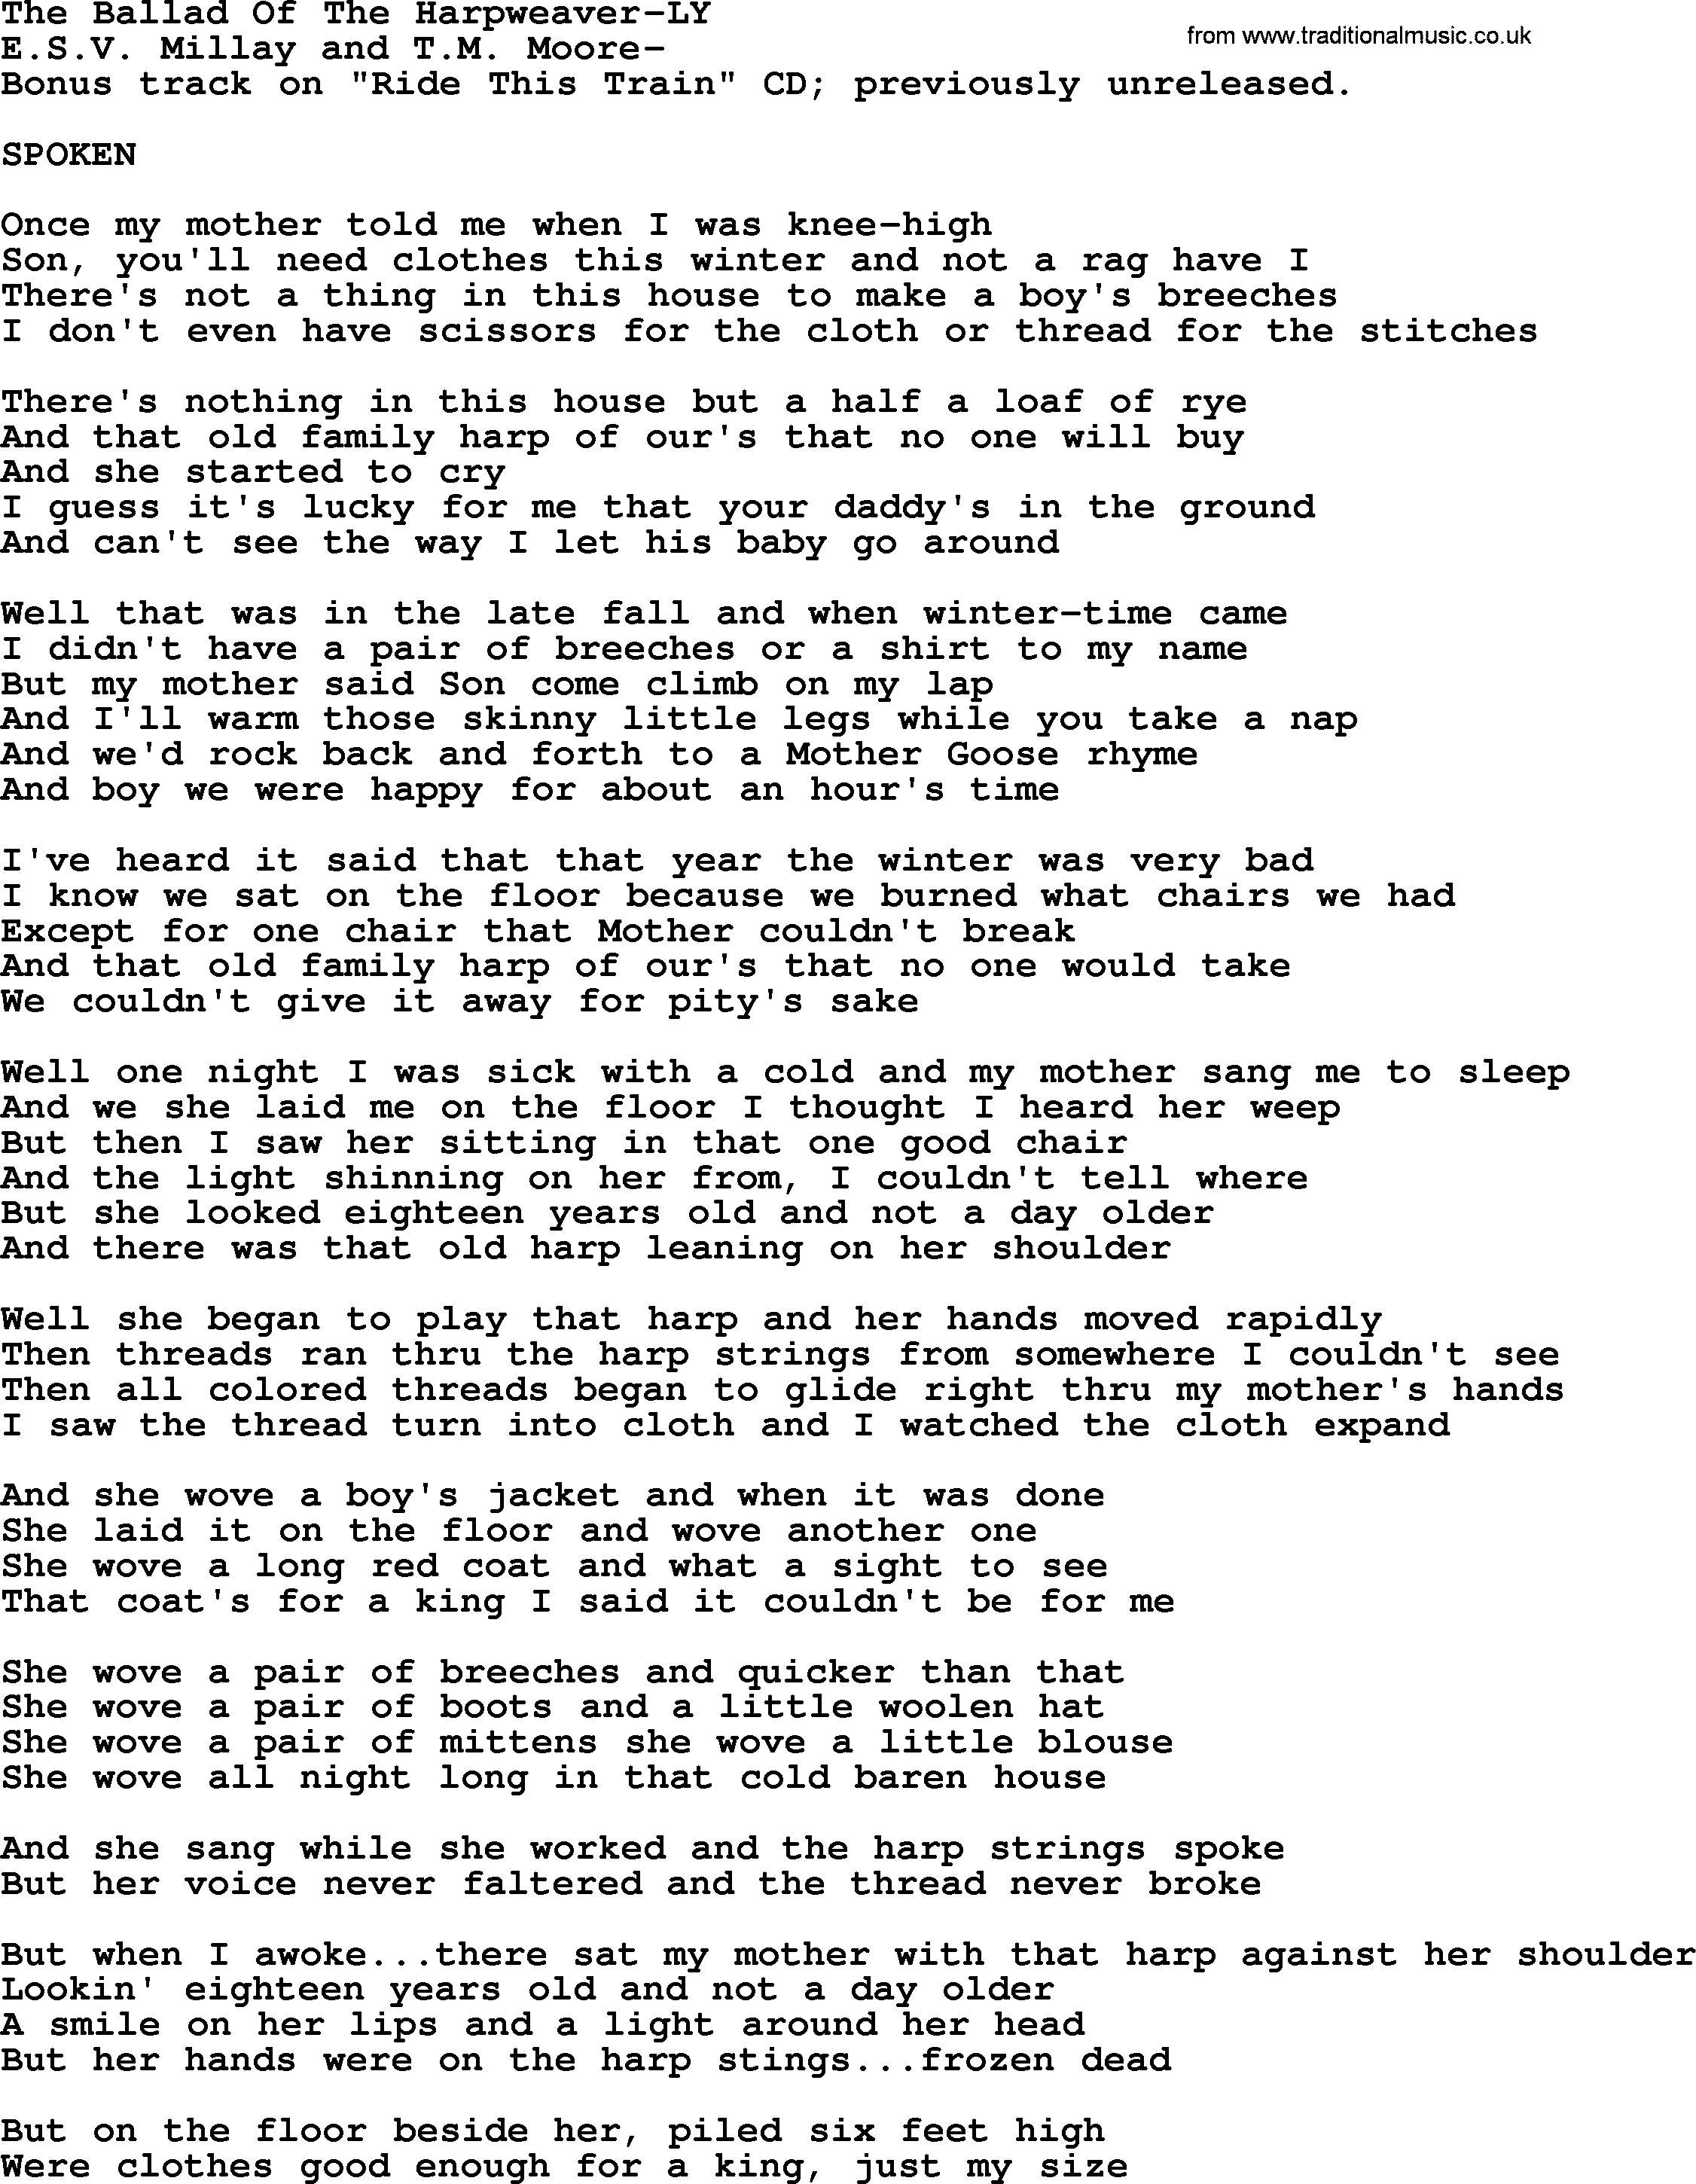 Johnny Cash song The Ballad Of The Harpweaver-ly.txt lyrics